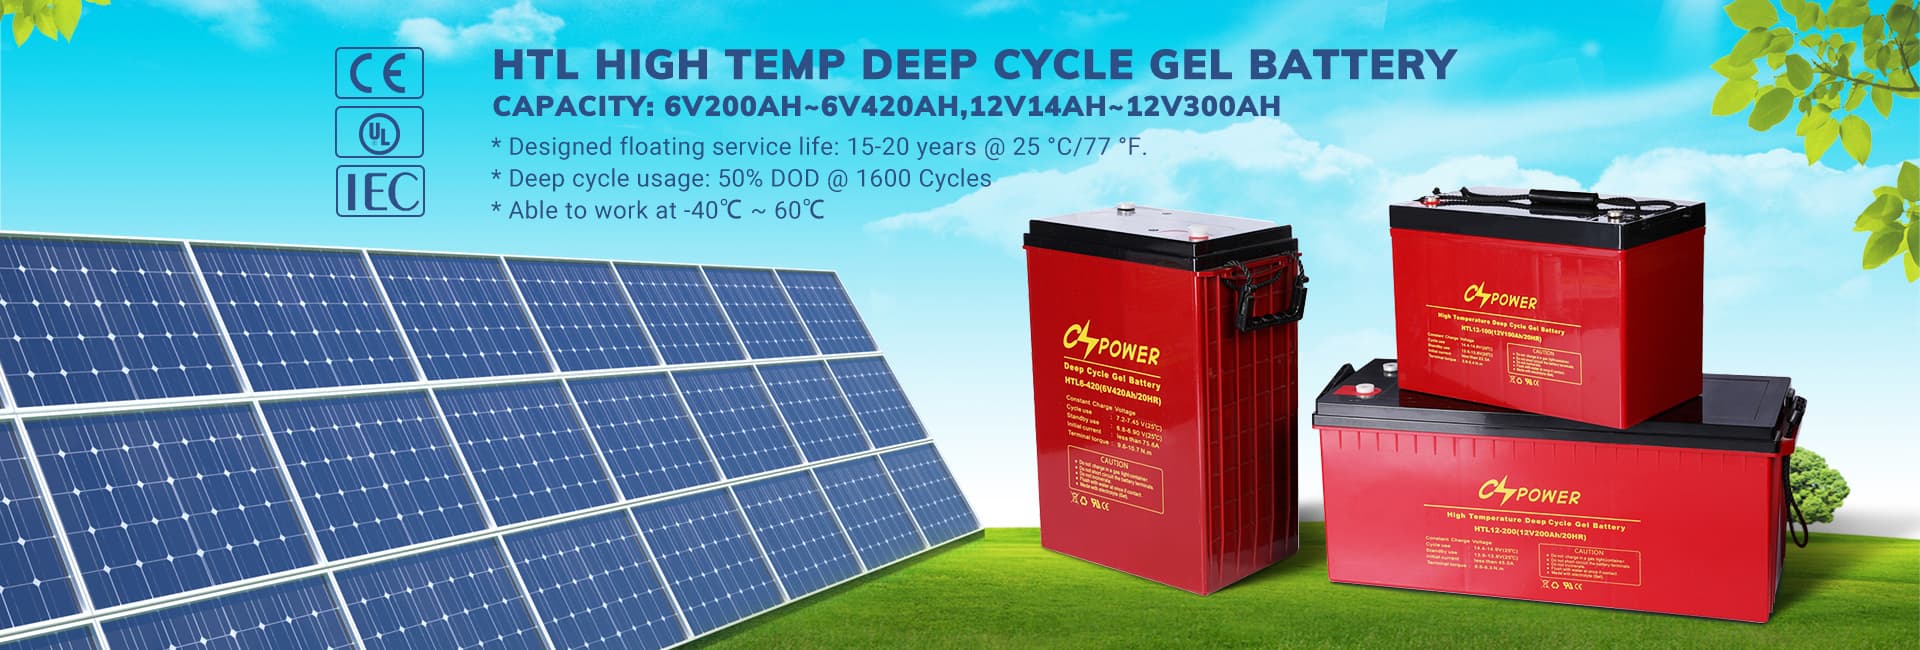 High temperature deep cycle gel battery